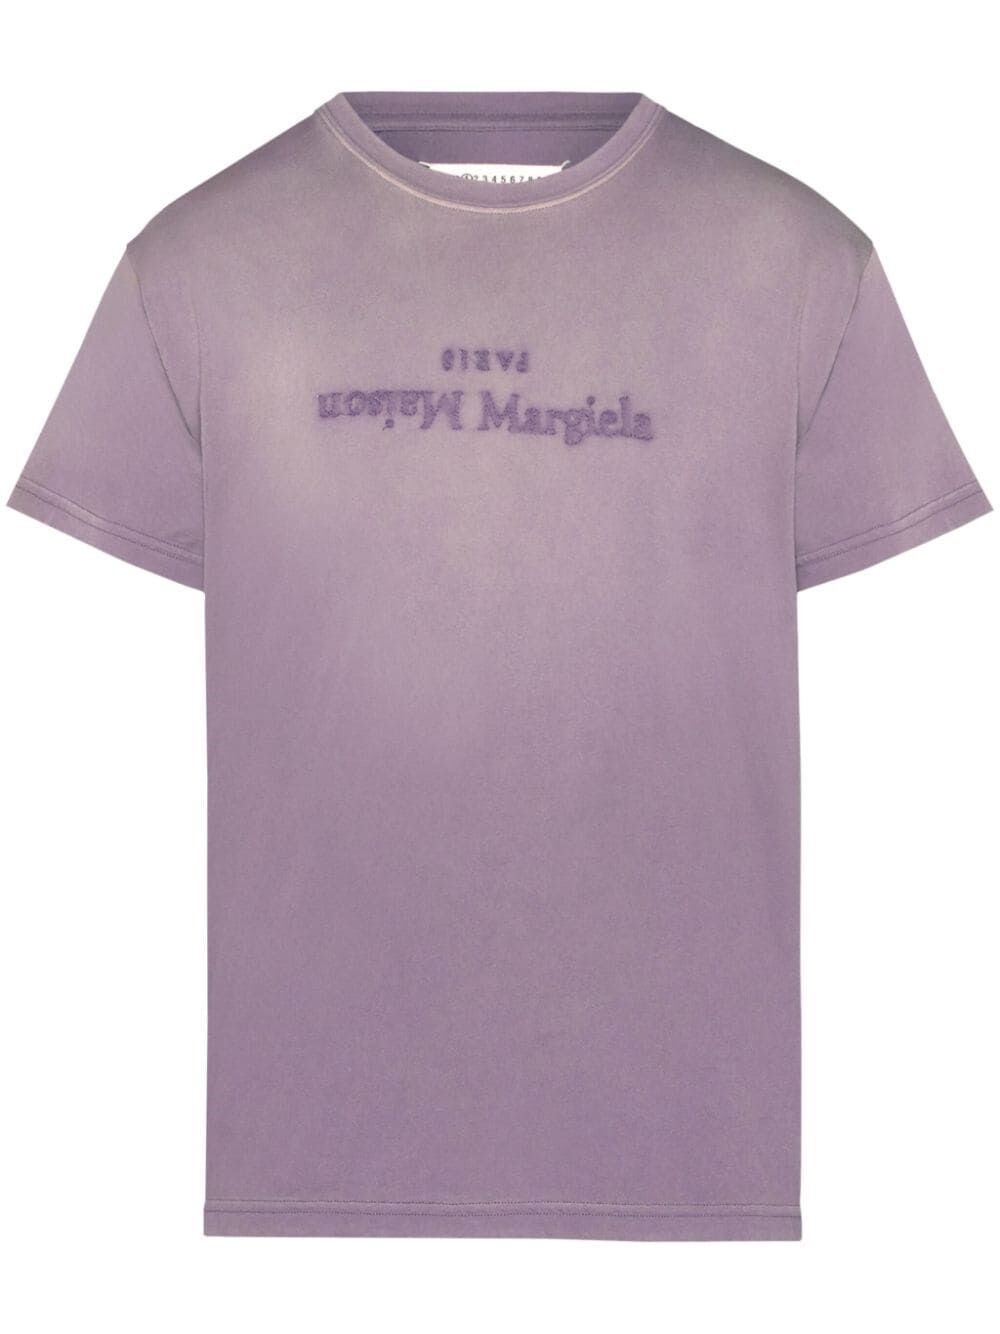 Maison Margiela Distressed T-shirt In Pink & Purple